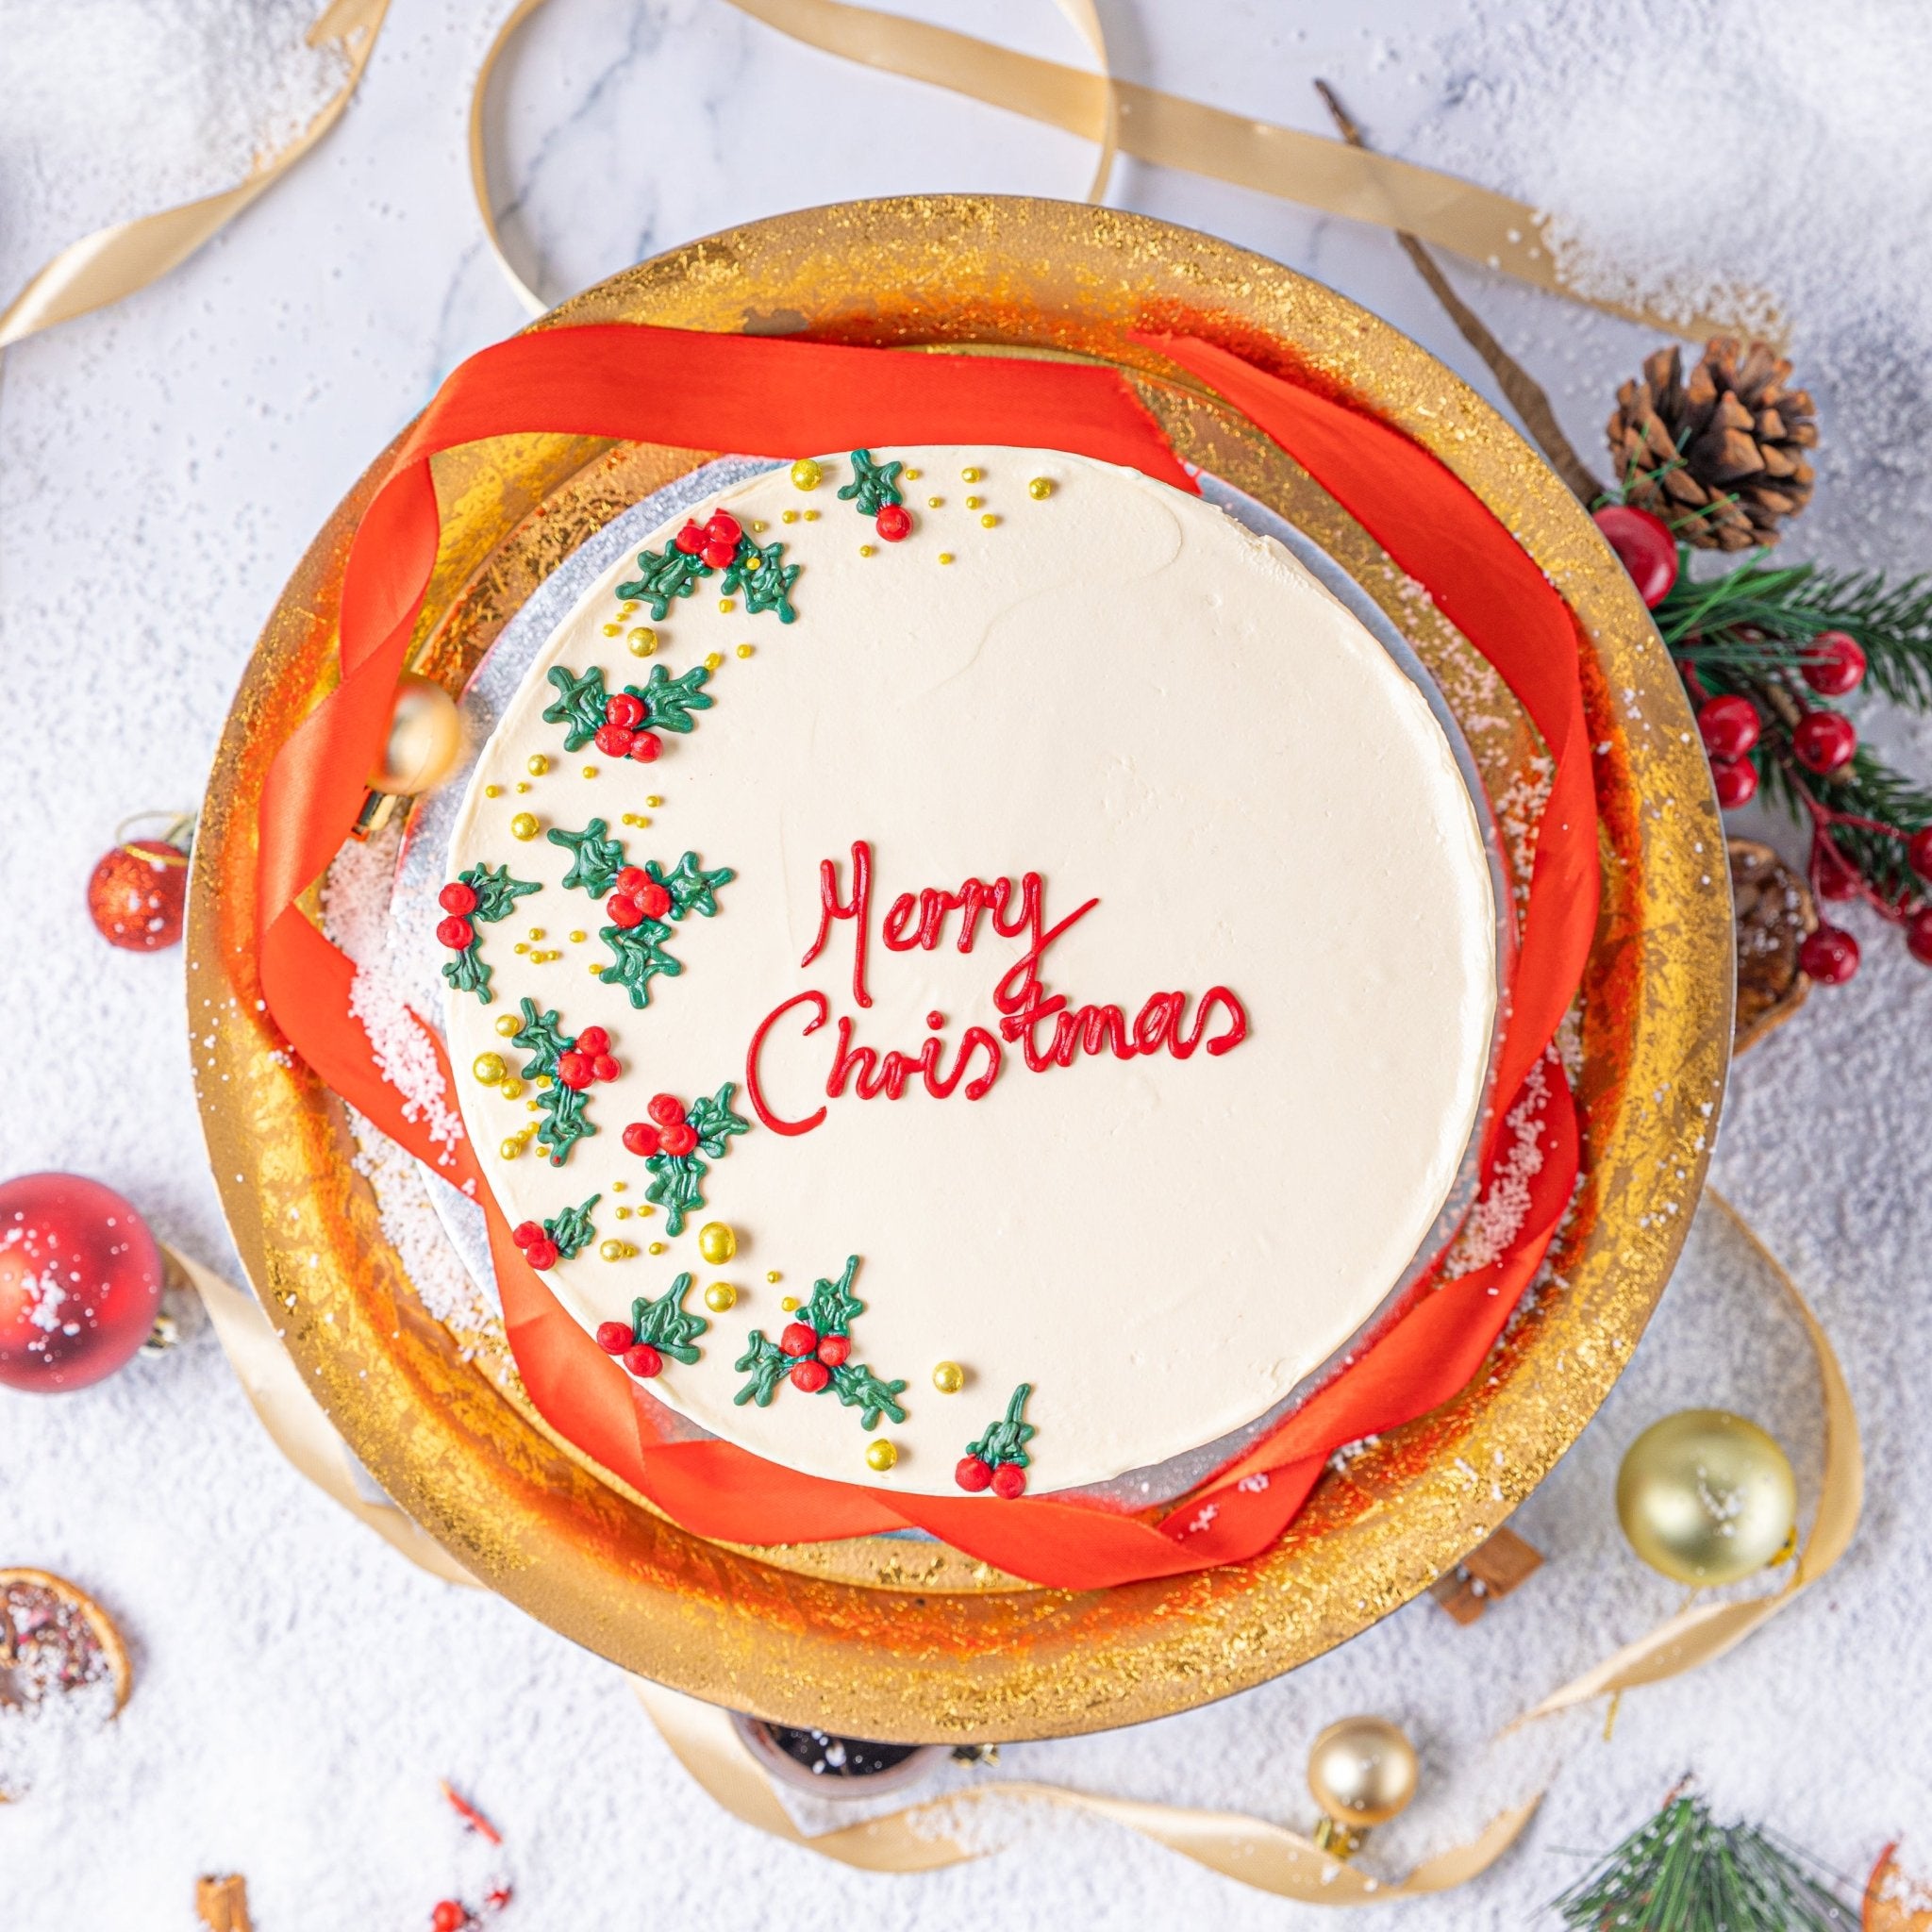 Merry Christmas Celebration Cake - Jack and Beyond